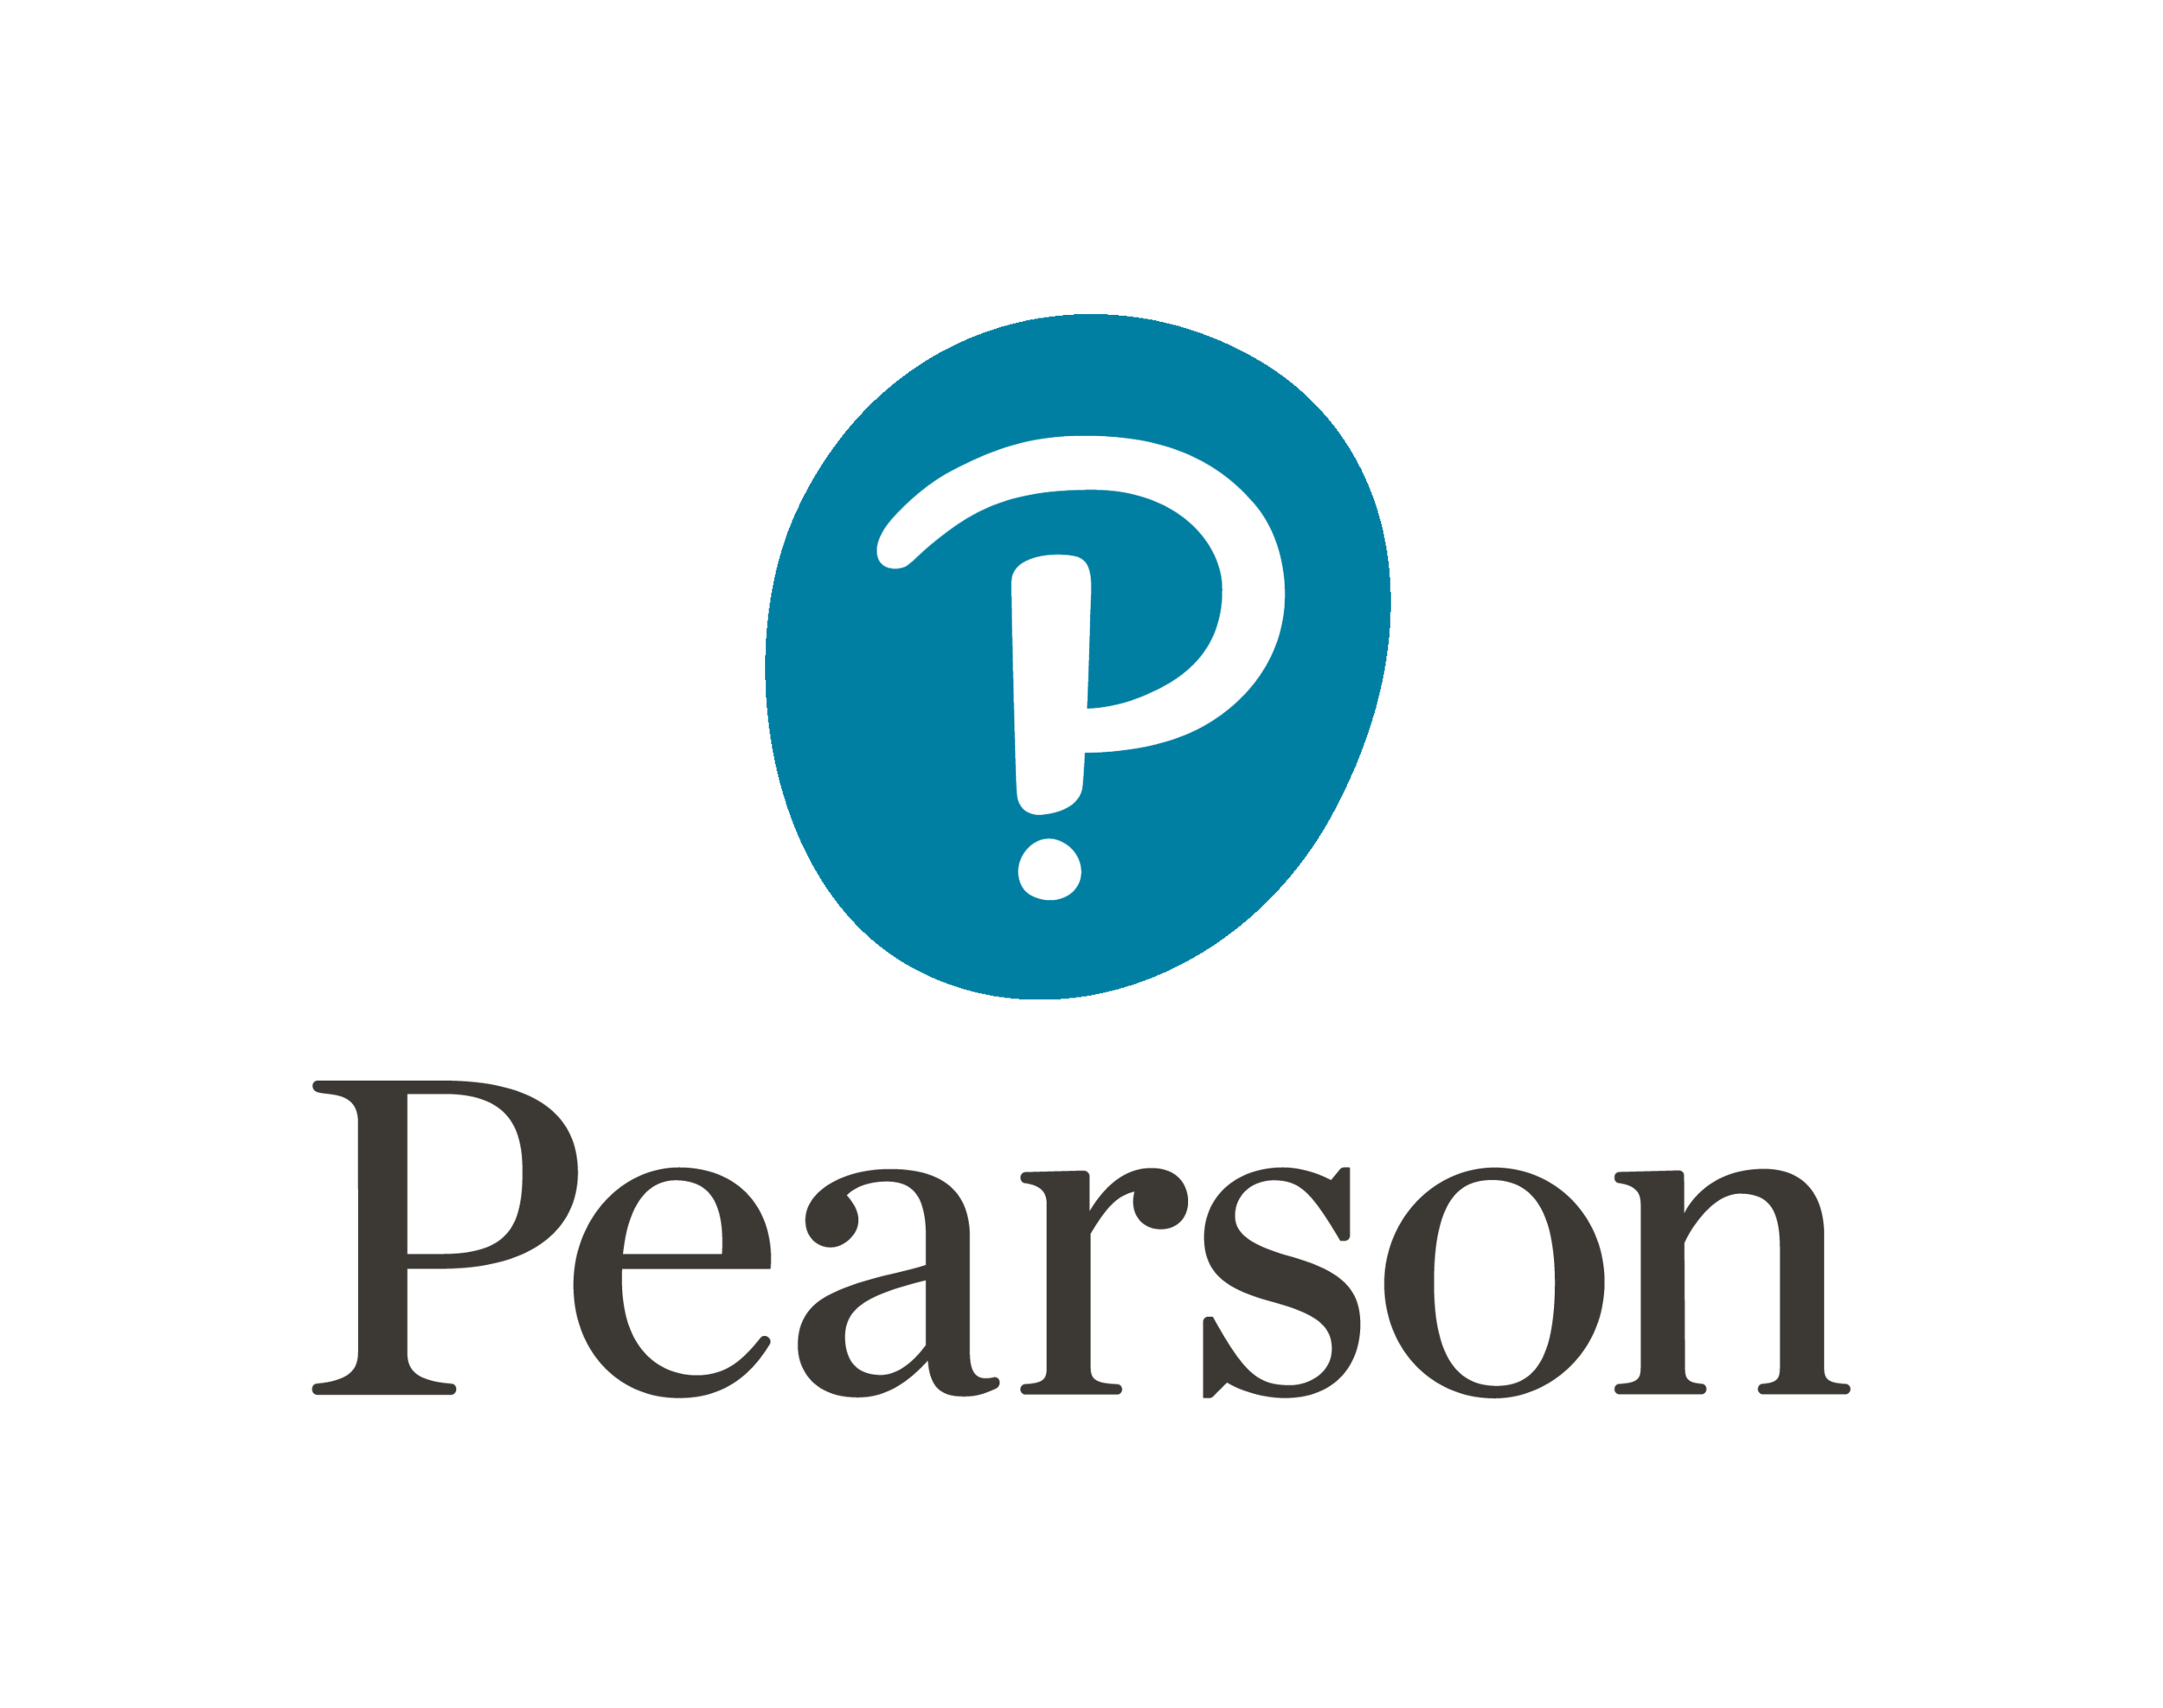 Pearson_logo.png